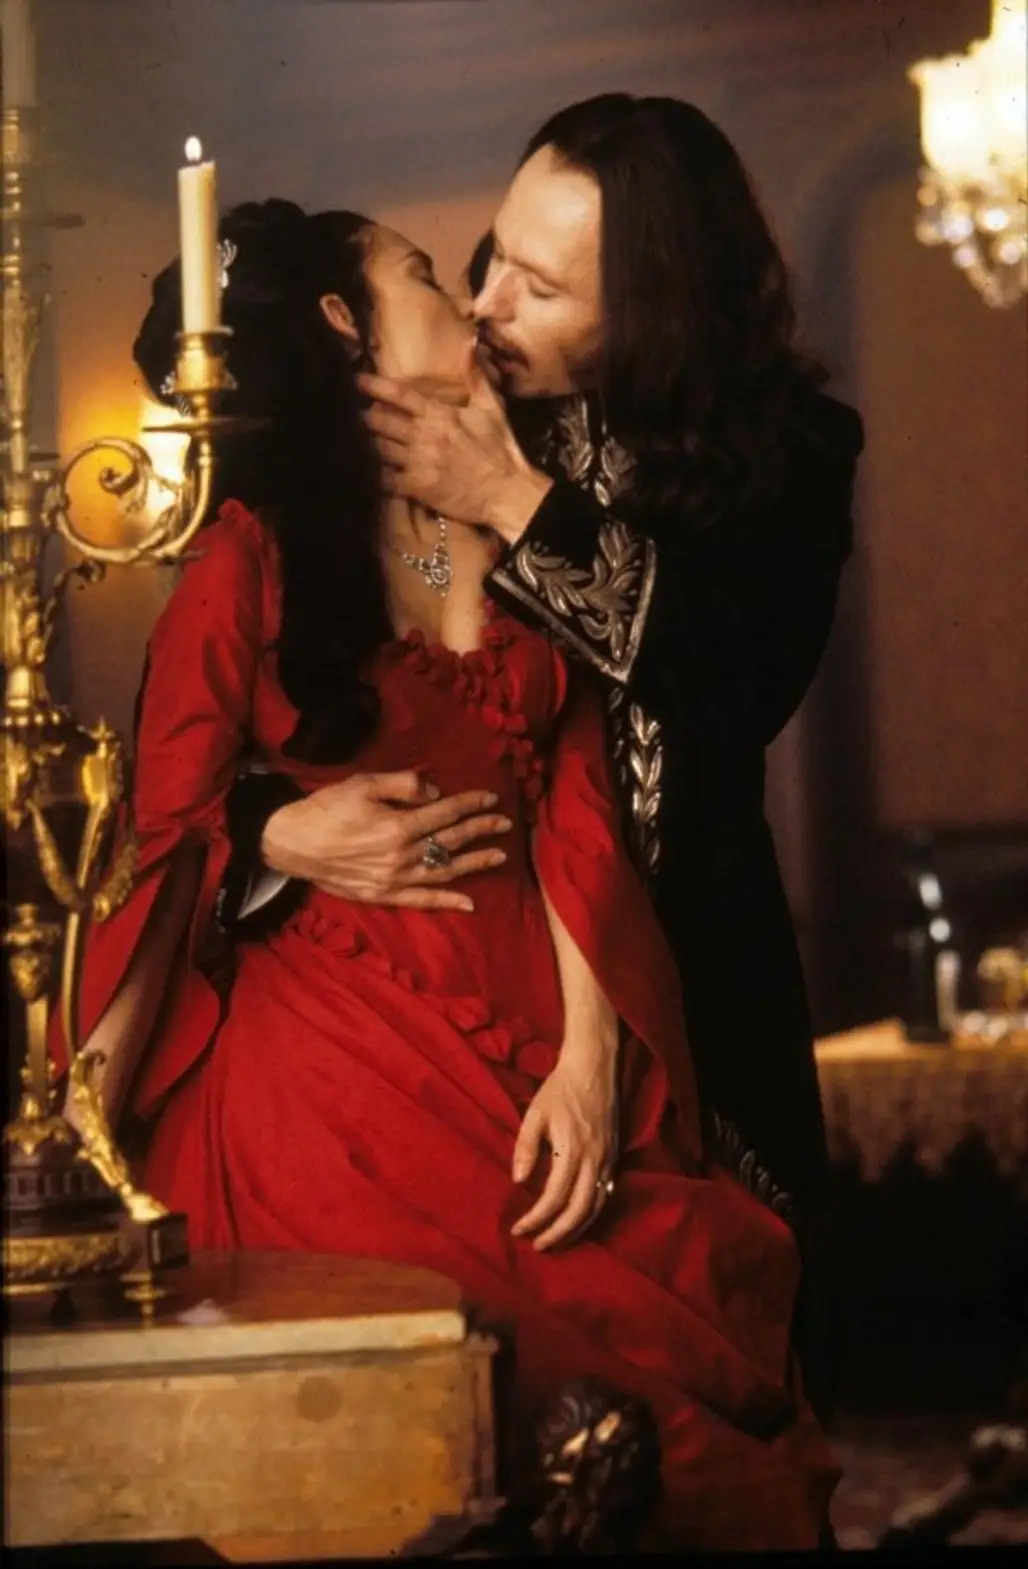 Mina and Dracula, "Bram Stoker's Dracula"